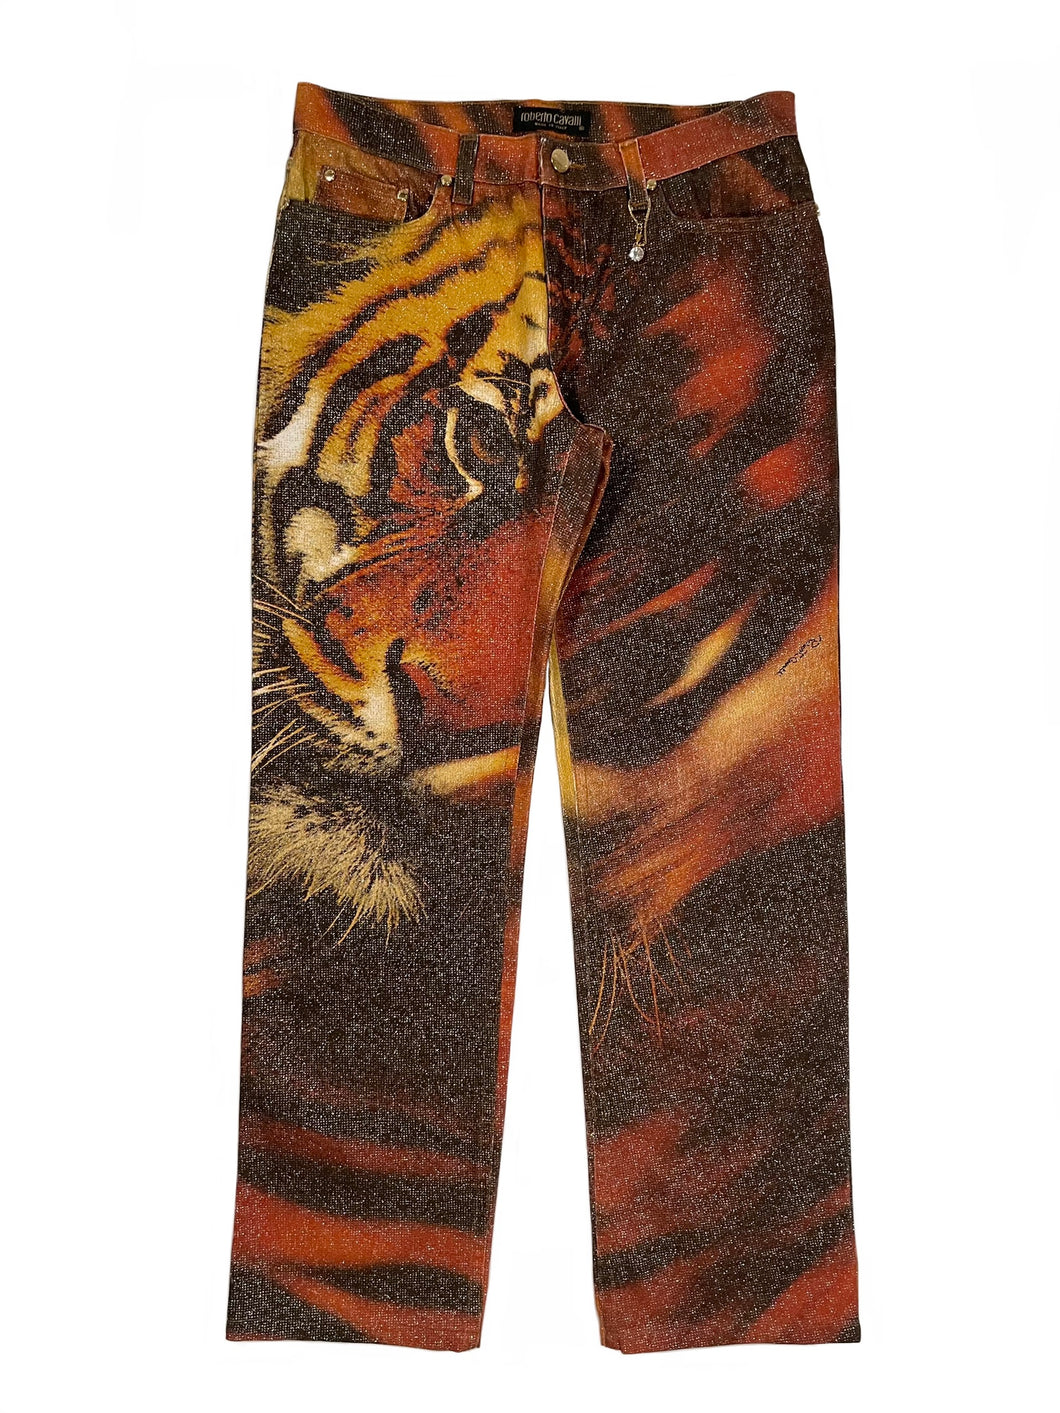 AW2000 Roberto Cavalli Tiger jeans